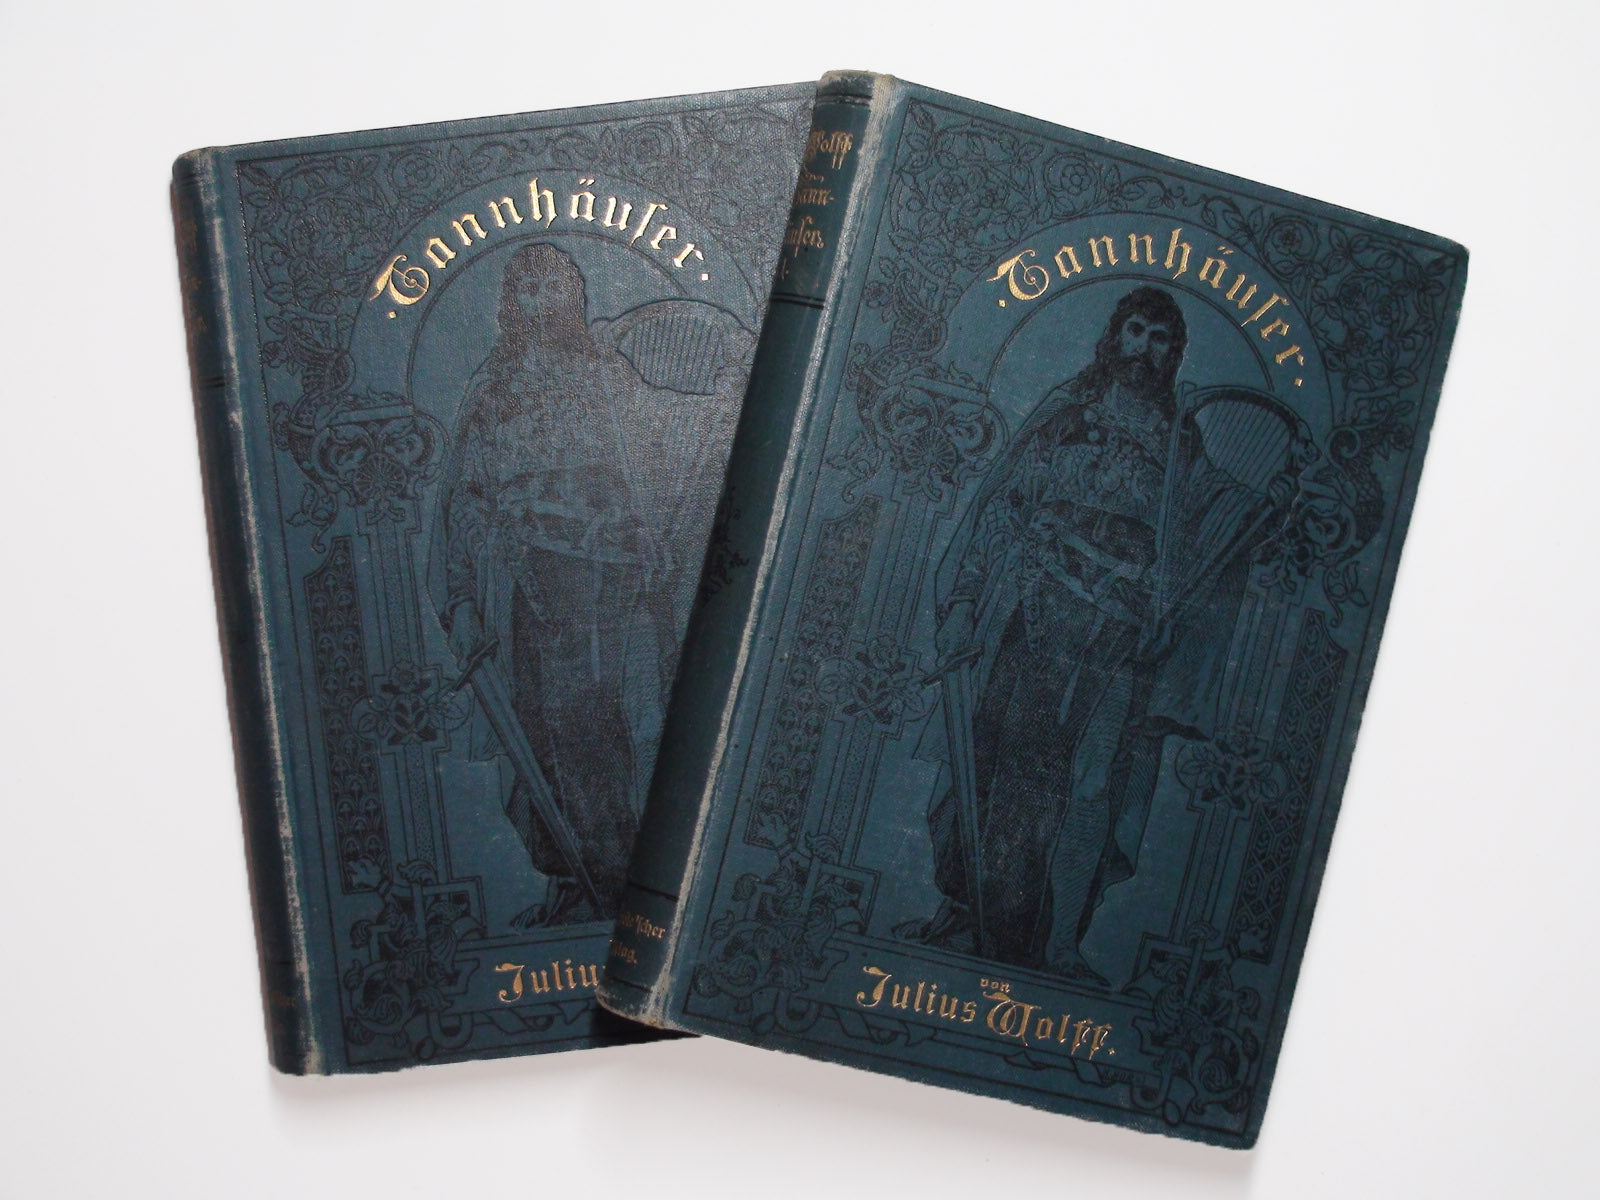 Tannhäuser, Ein Minnesang, Julius Wolff, Two Vol Set, German Language, 1895